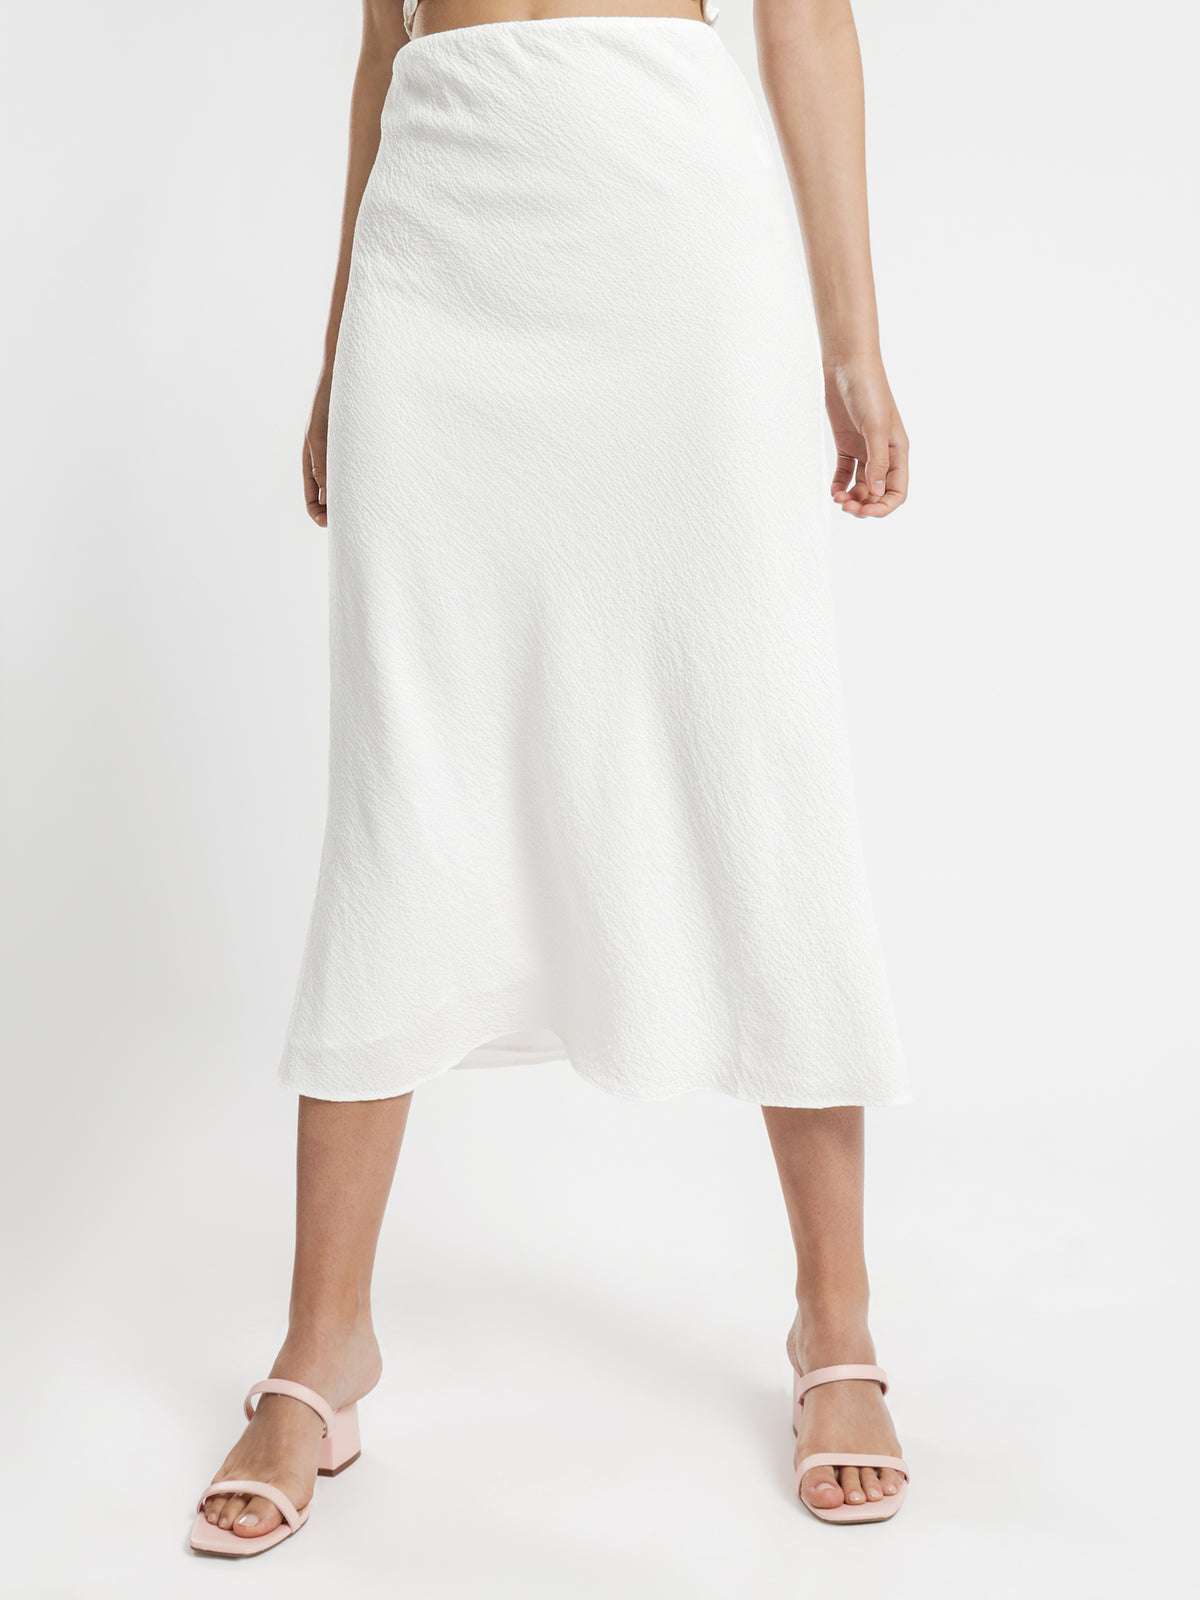 Tia Crinkle Skirt in White